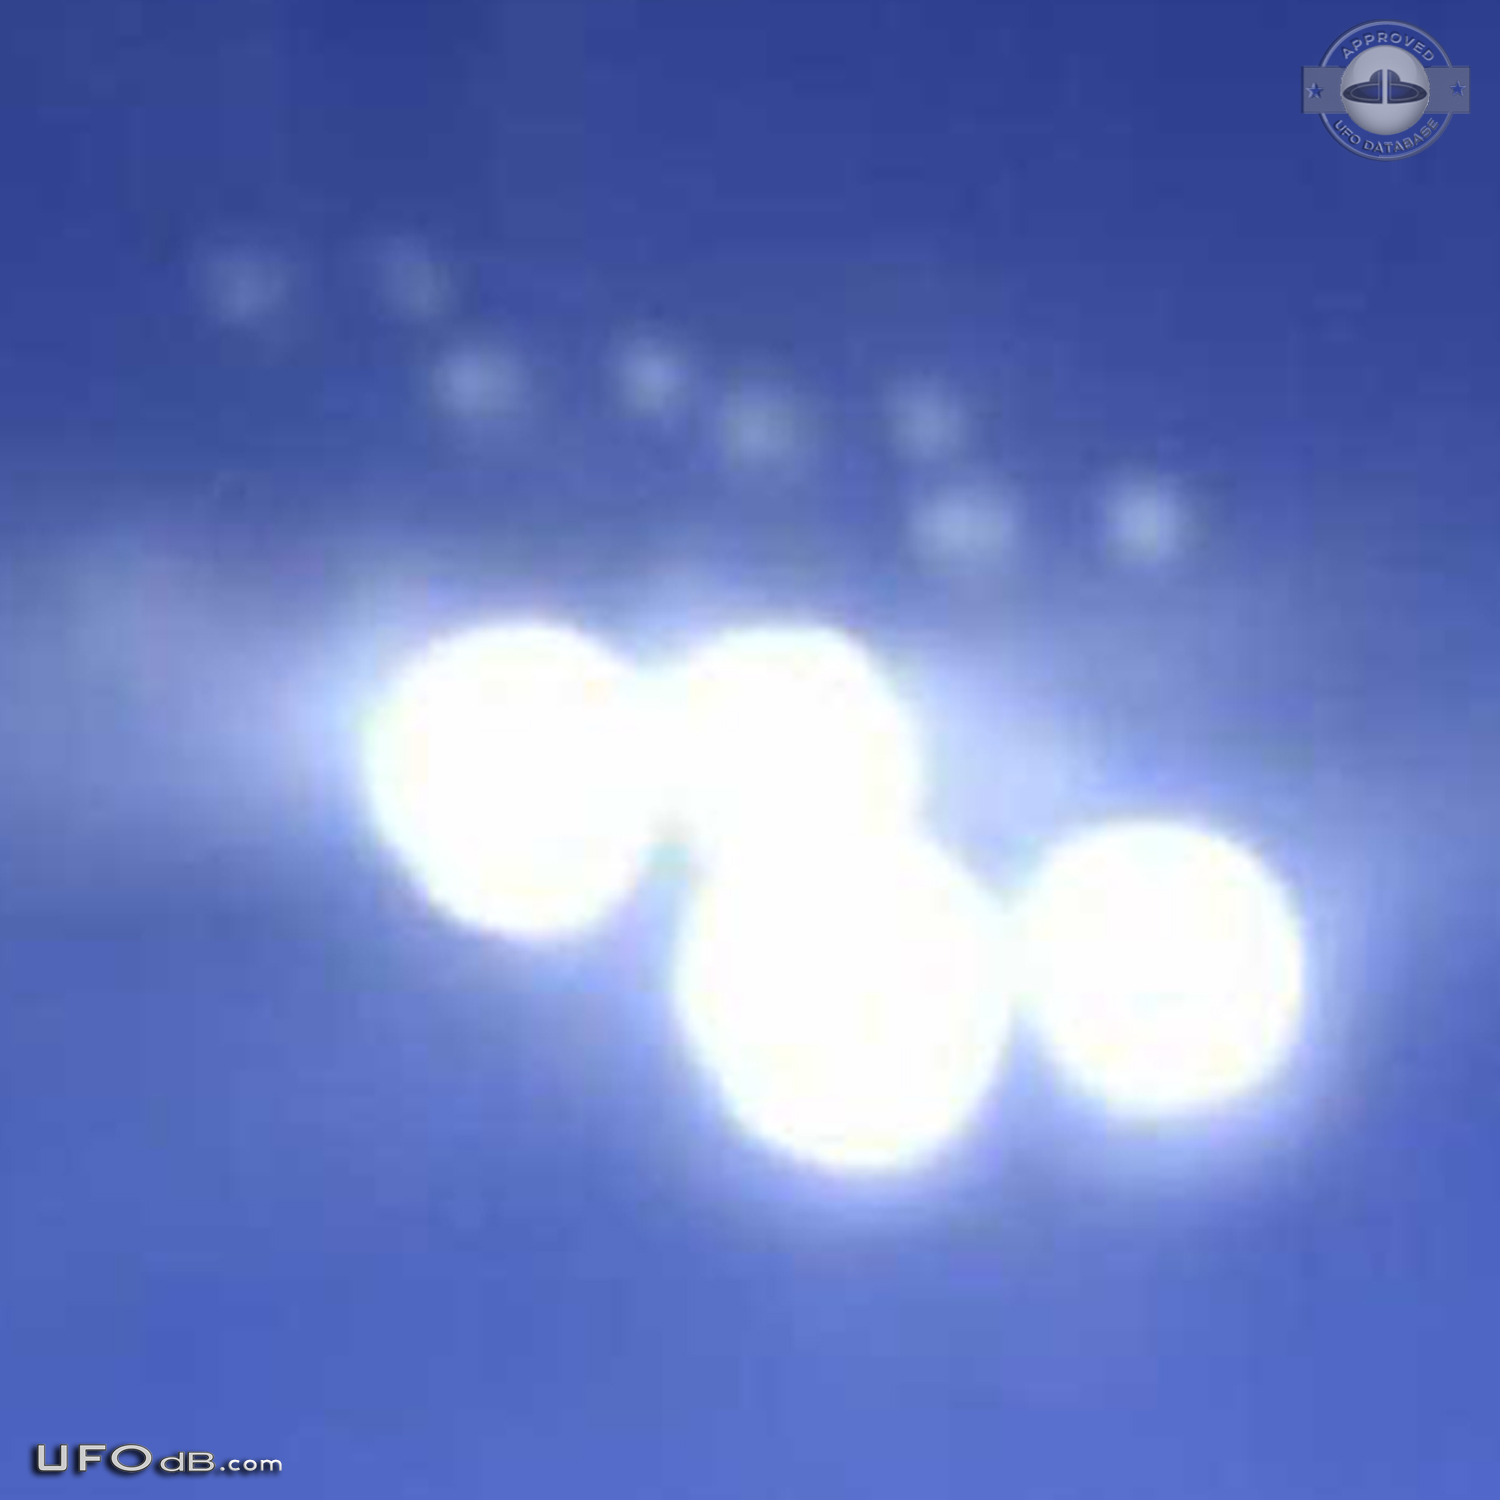 100 airplane passengers panic at UFO sighting - Konia, Cyprus 2012 UFO Picture #443-3